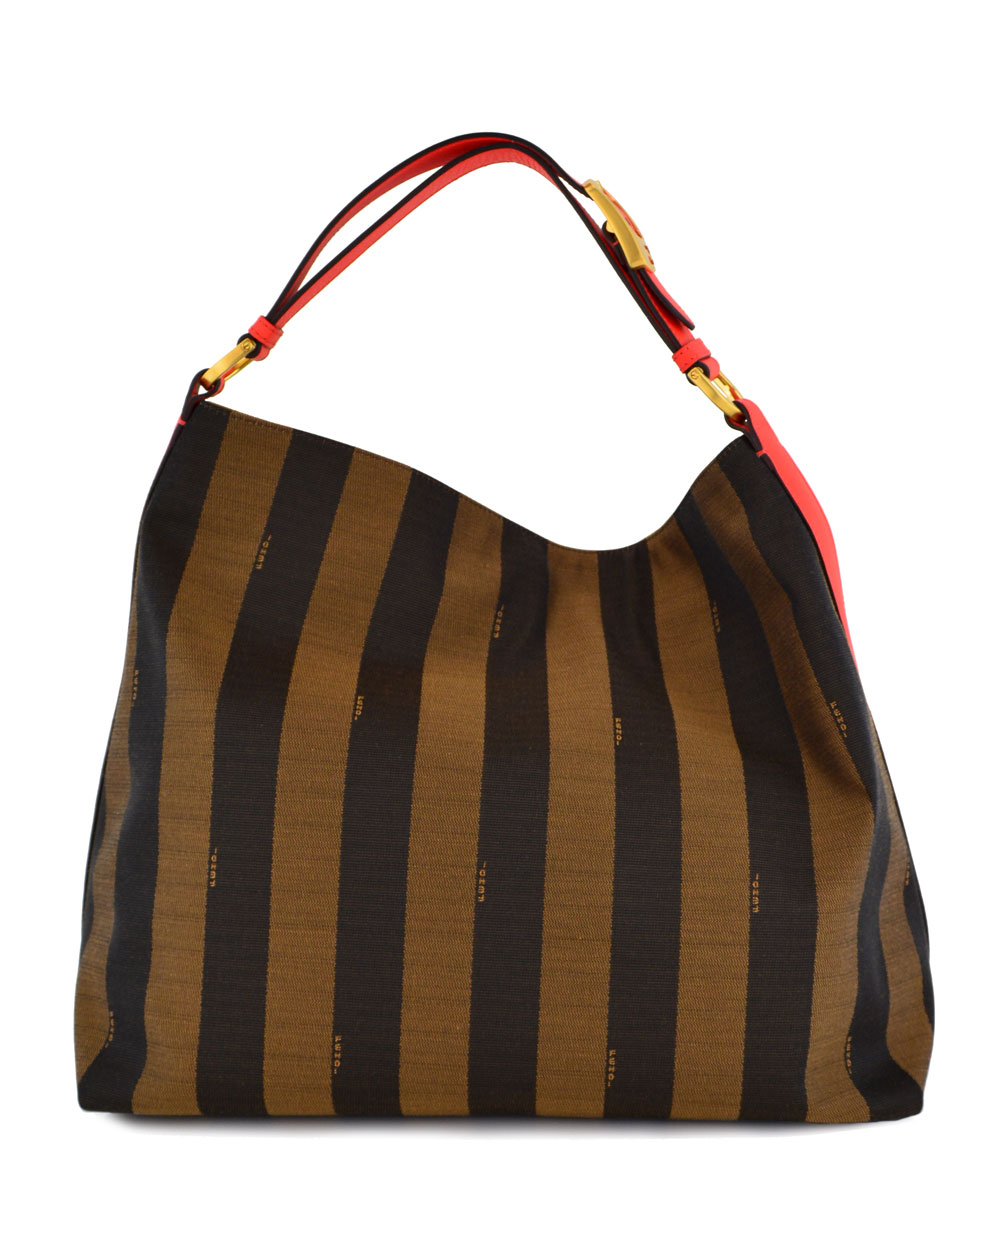 Fendi Pequin Stripe and Poppy Borsa Hobo Bag in Brown - Lyst